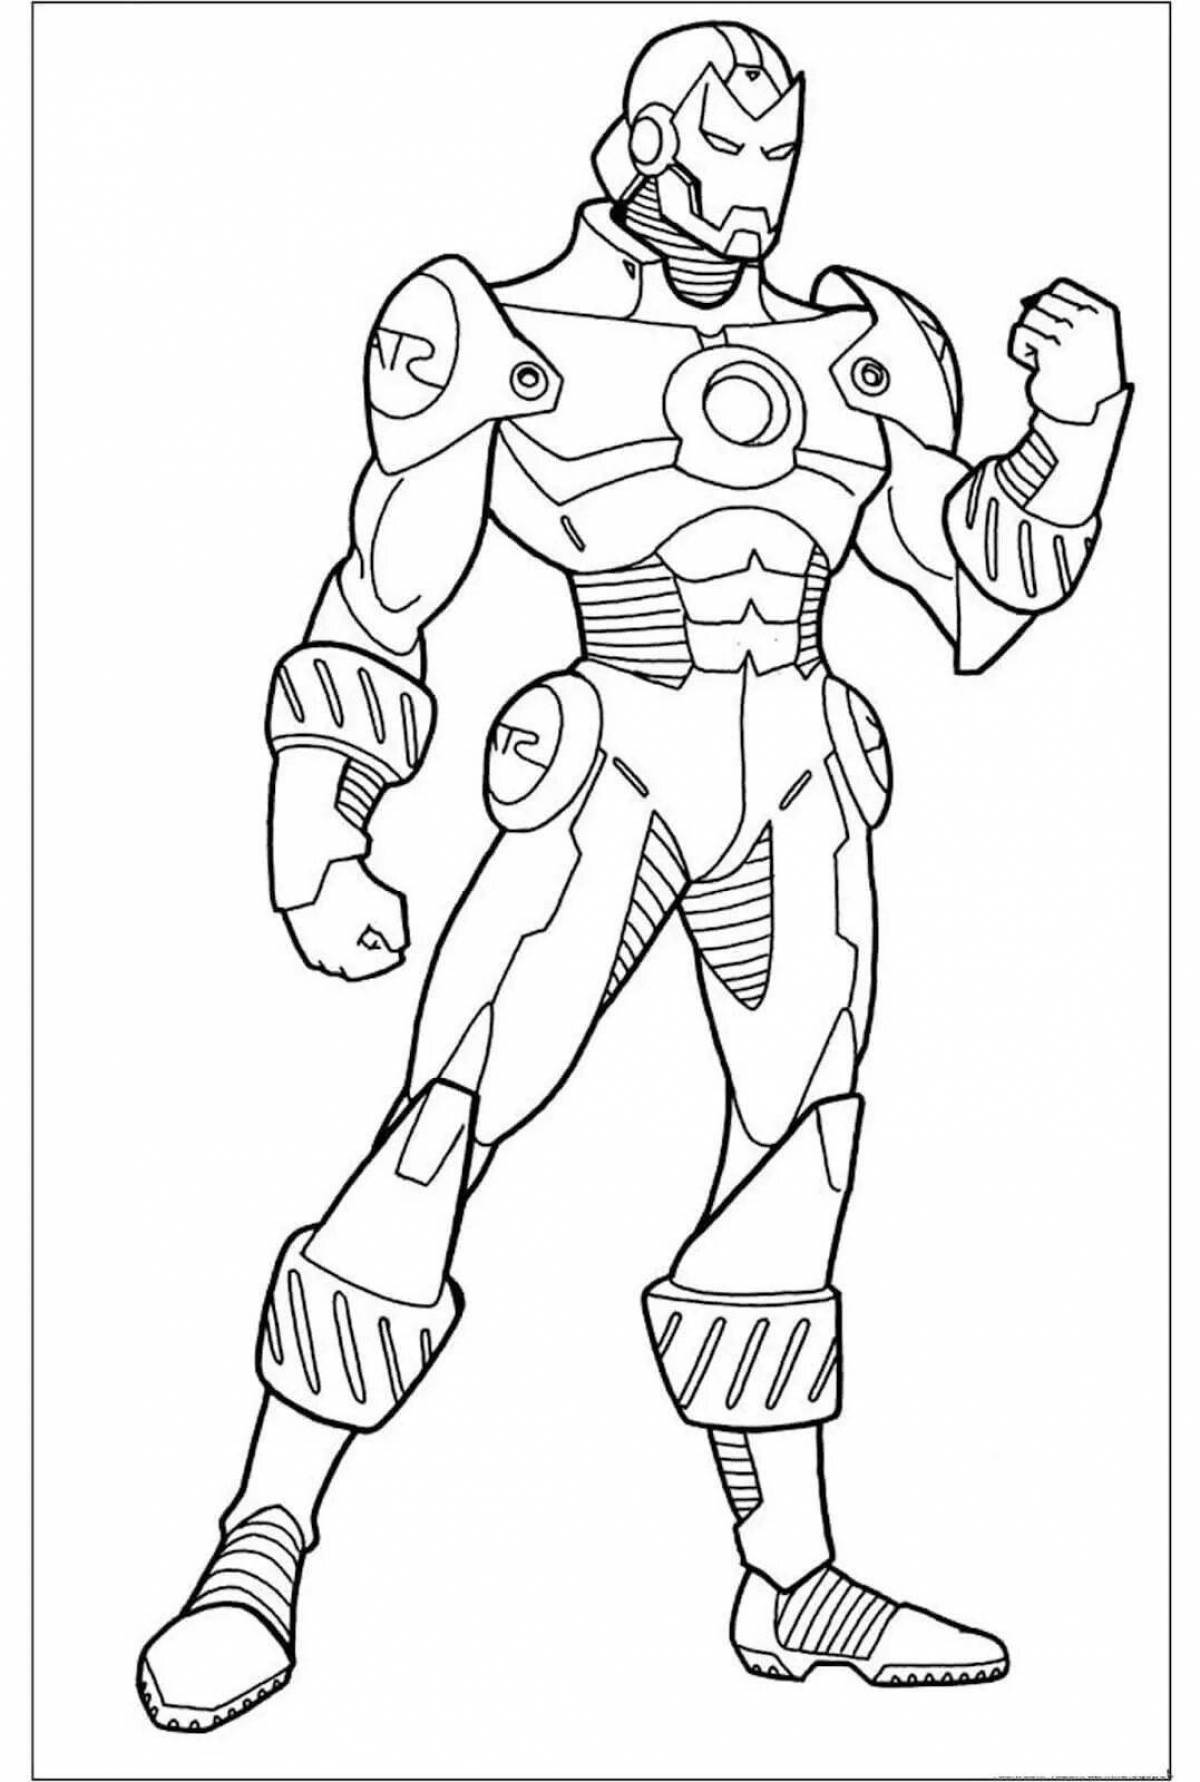 Marvel iron man pattern coloring